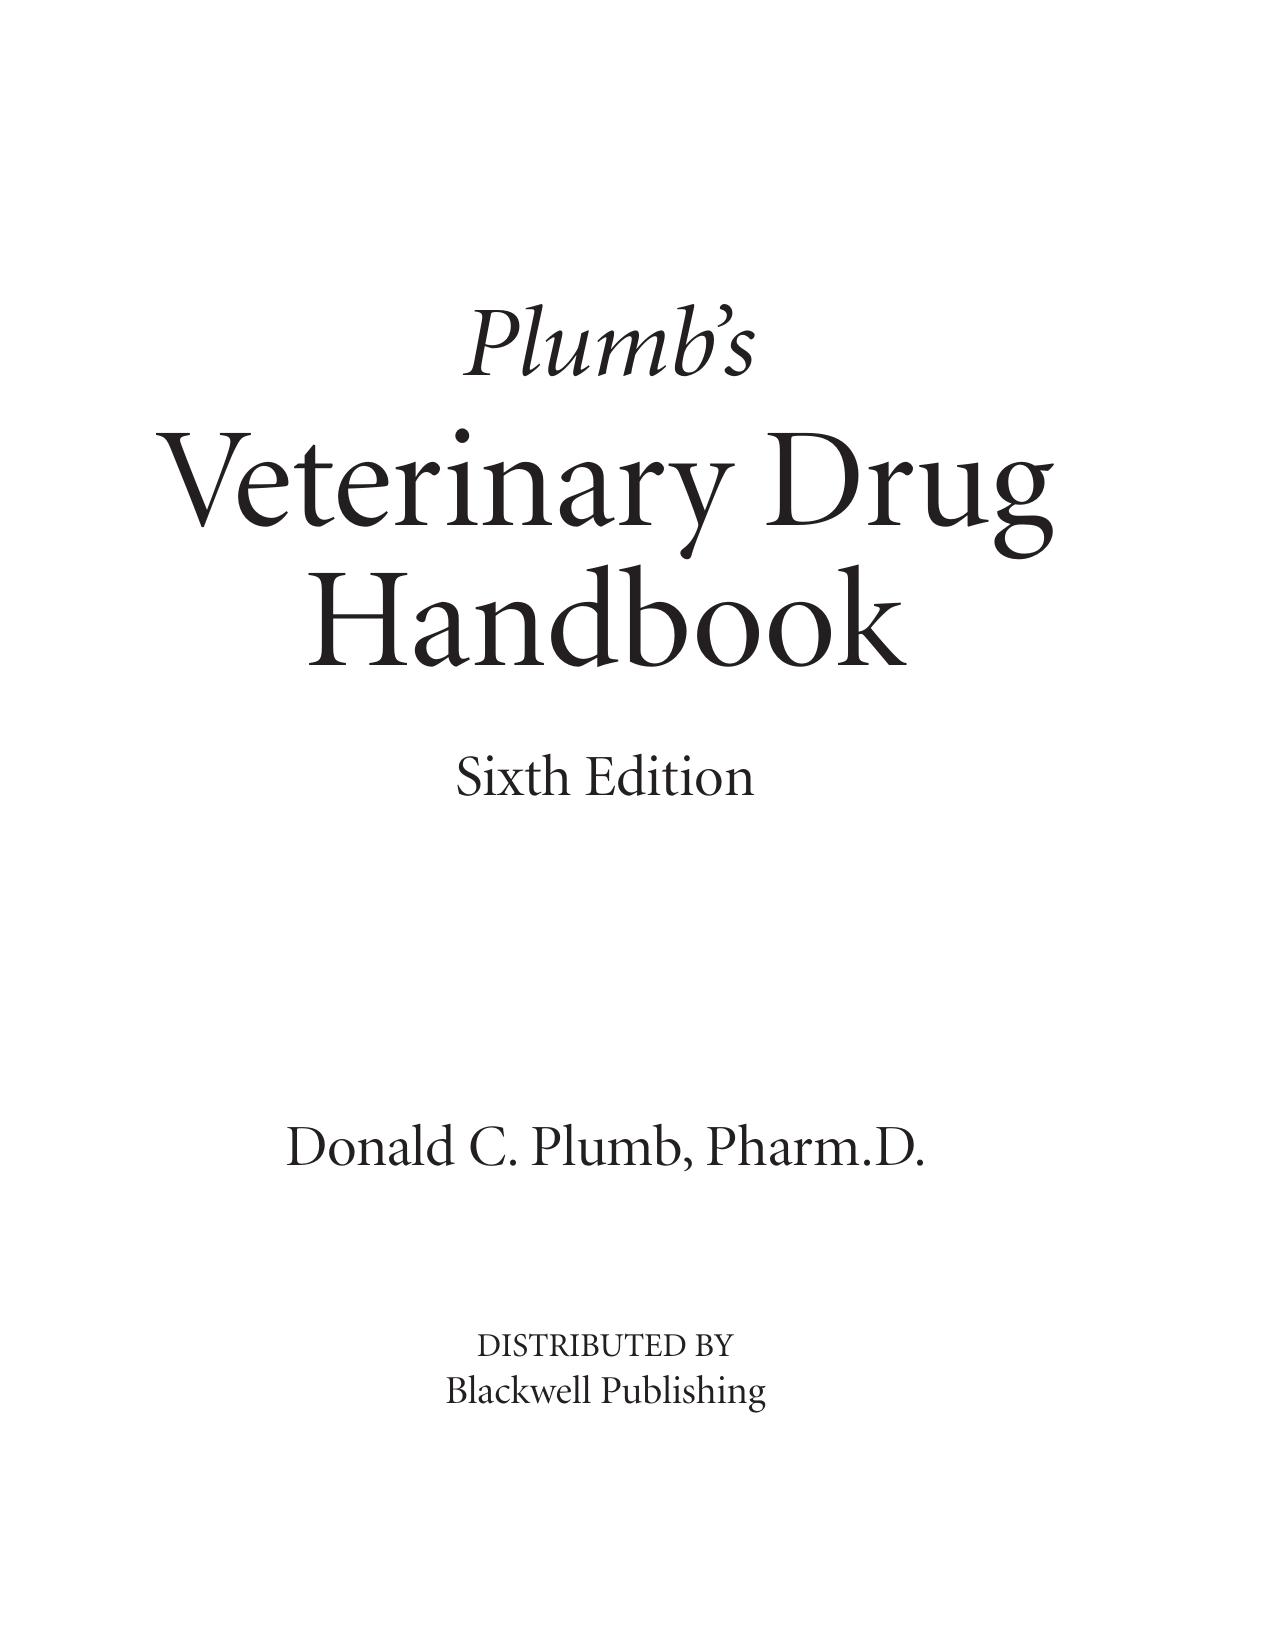 Plumb's Veterinary Drug Handbook [Desk Ed.] 6th ed.